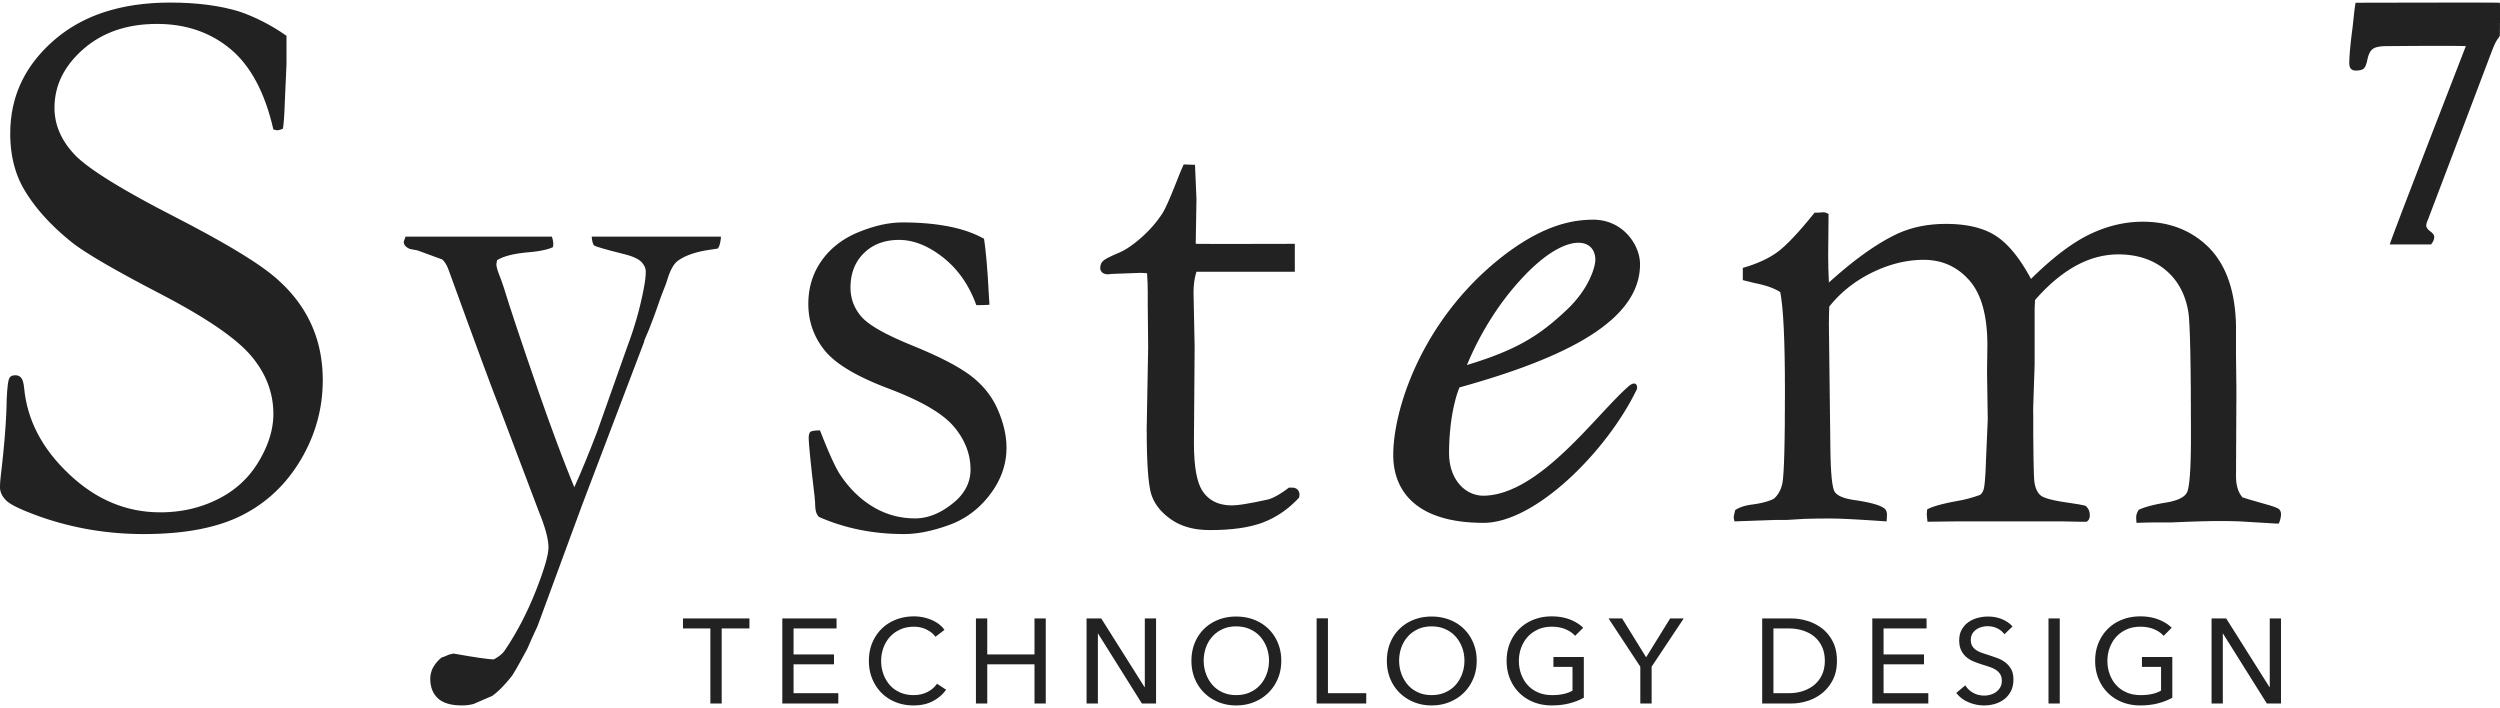 System Seven Technology Design